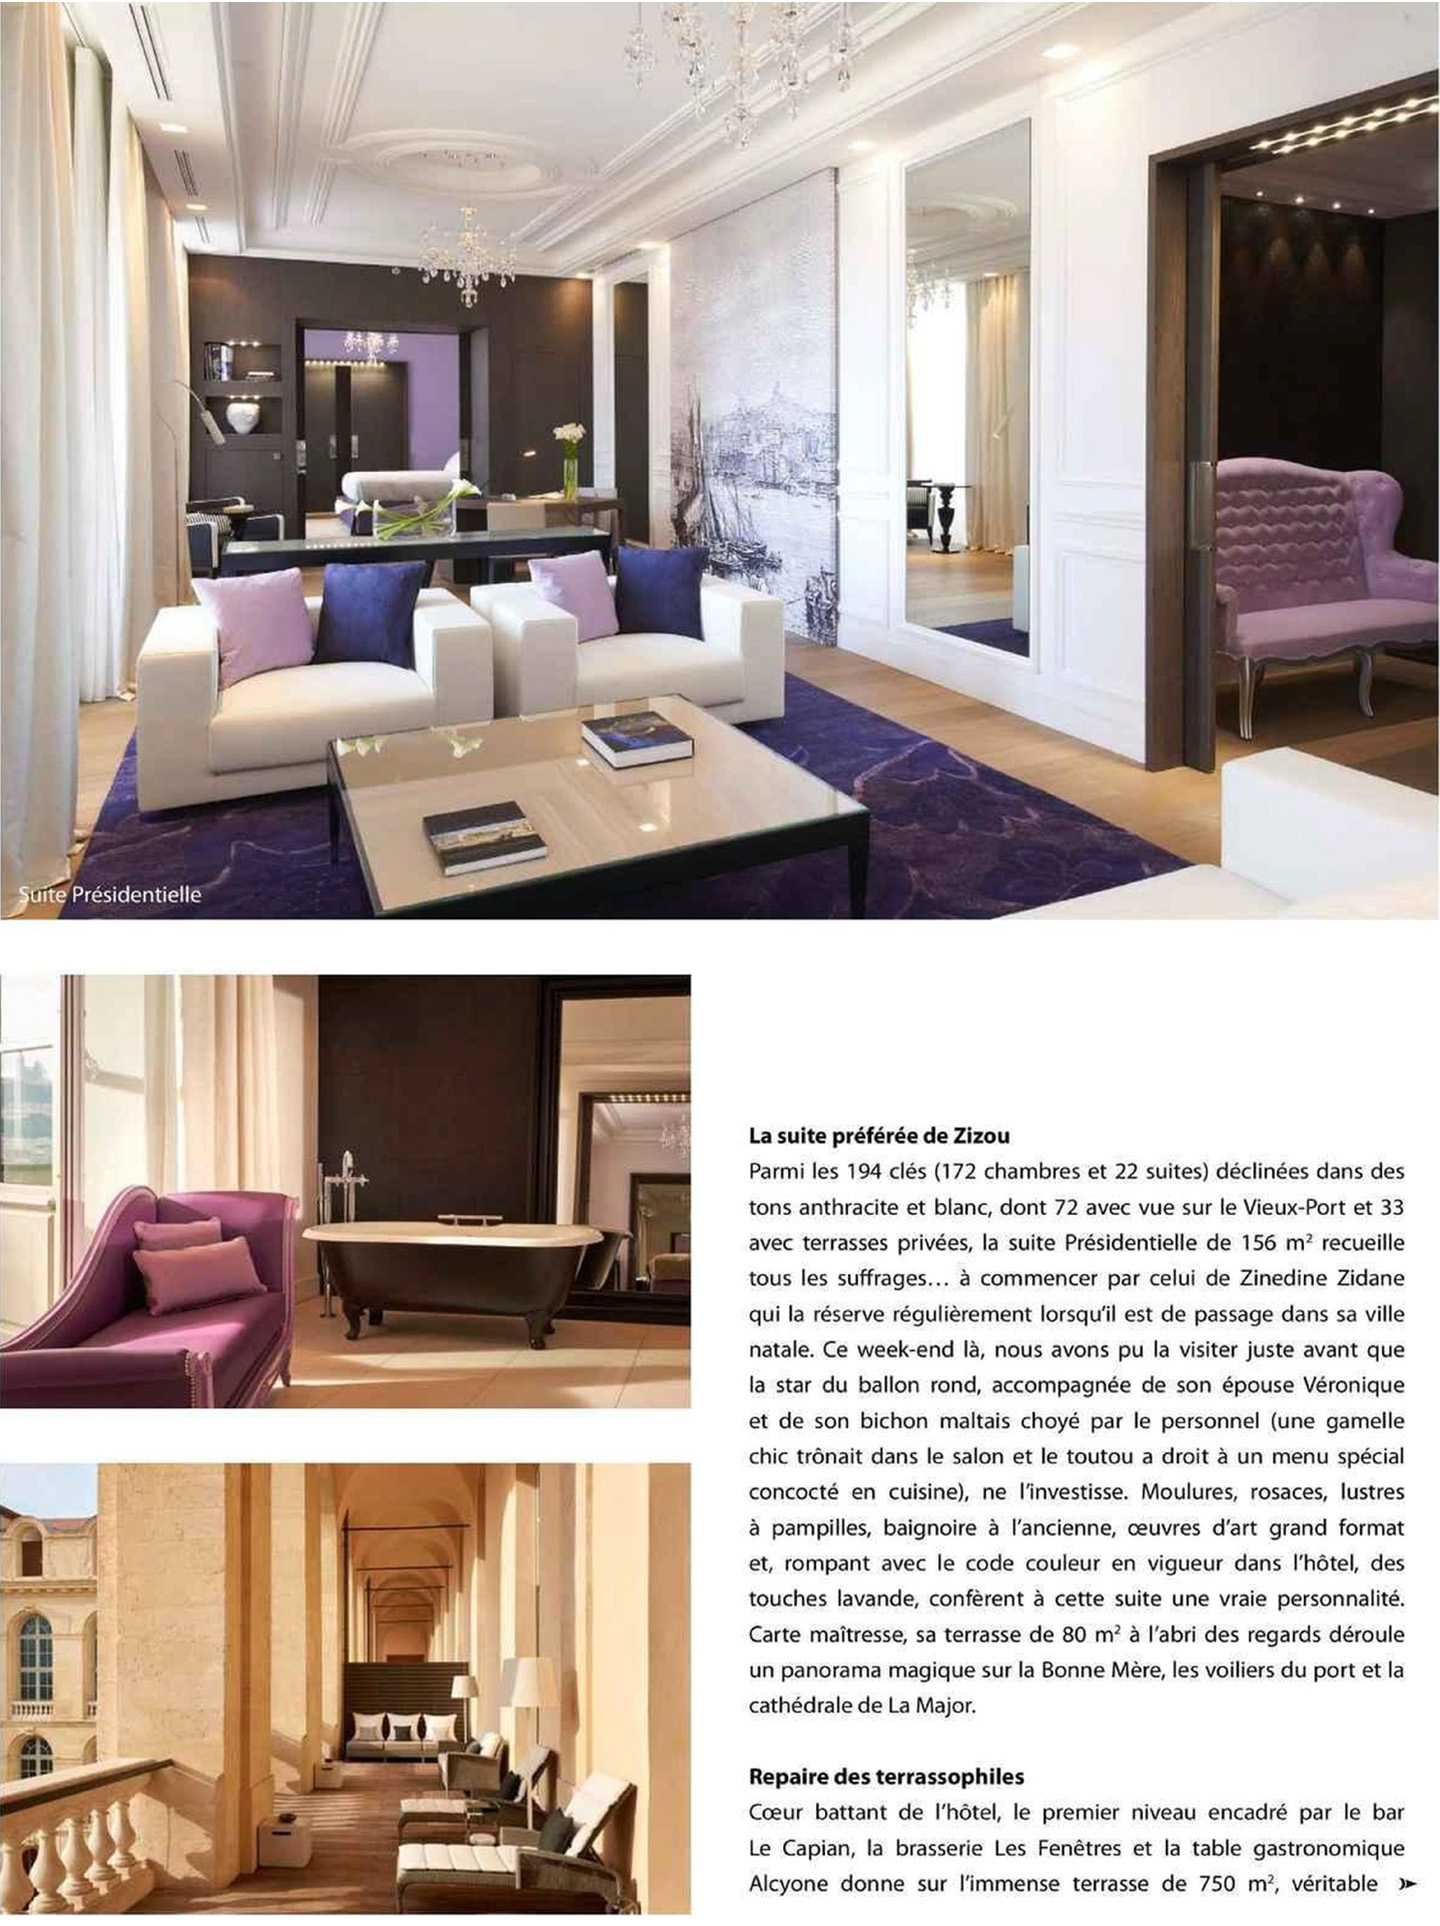 Article on InterContinental Marseille hotel dieu, studio jean-philippe nuel, notre dame de la garde, 5 star luxury hotel, interior design, luxury hotel, interior design